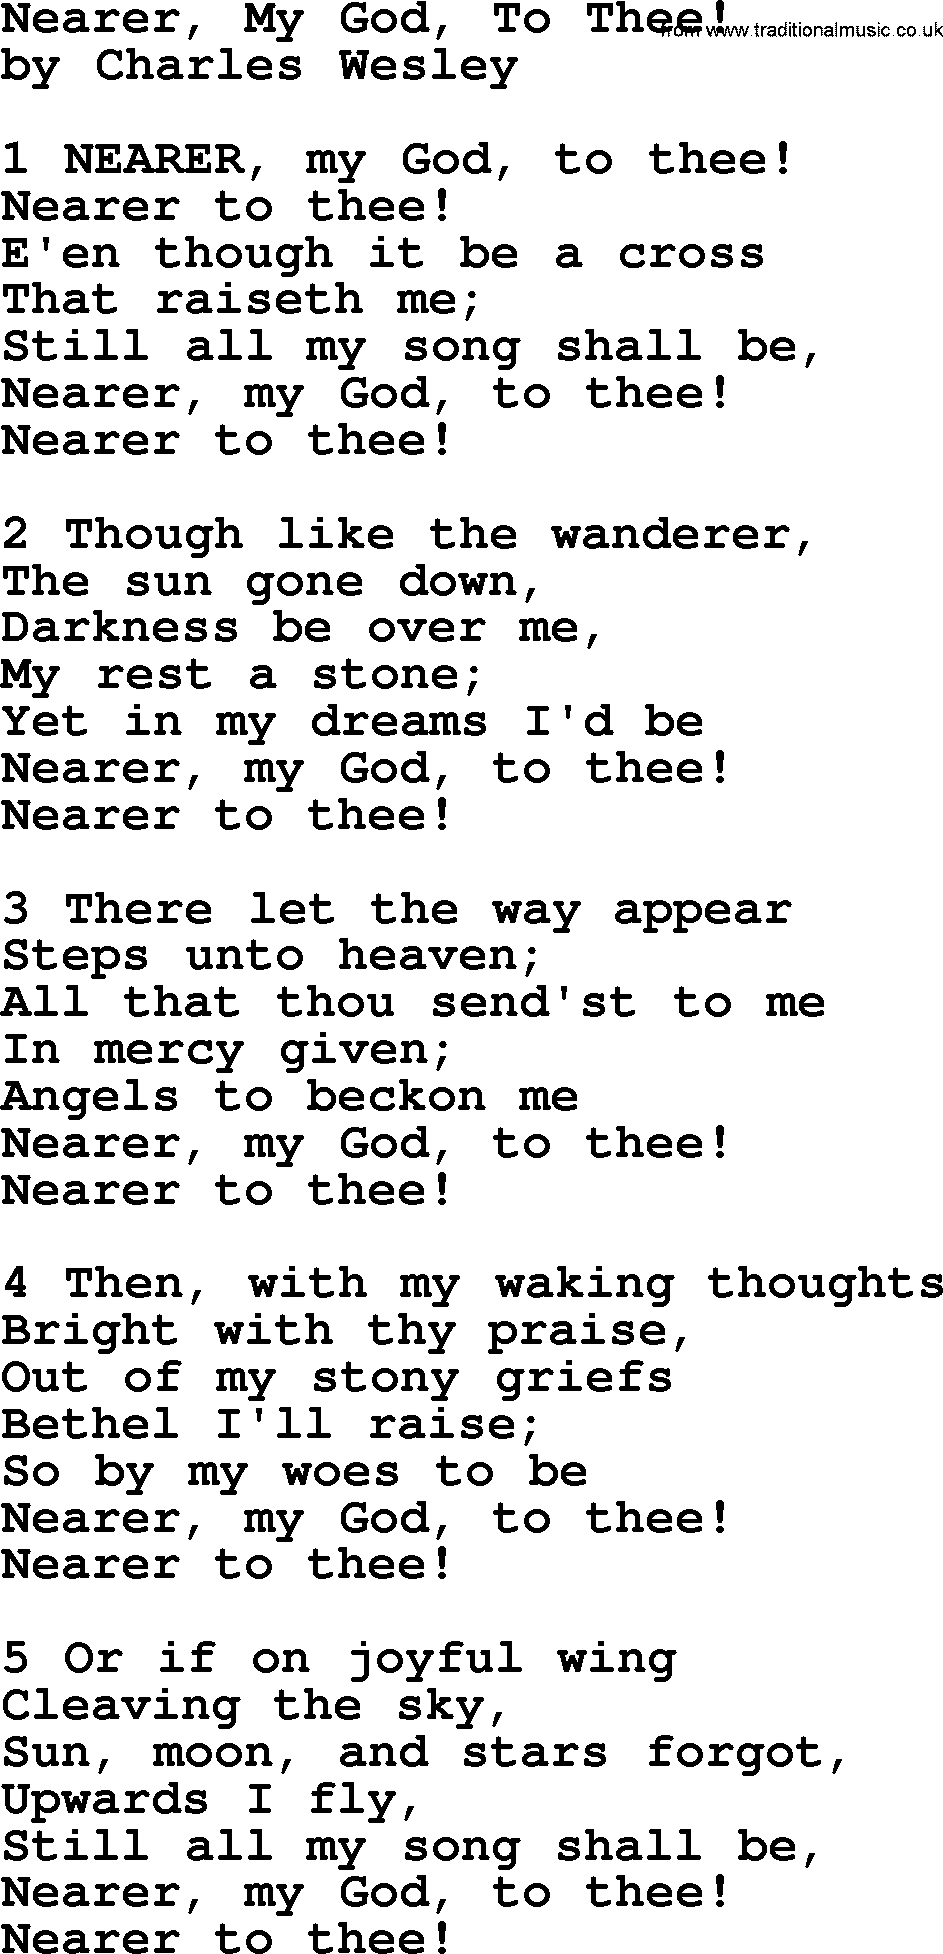 Charles Wesley hymn: Nearer, My God, To Thee!, lyrics